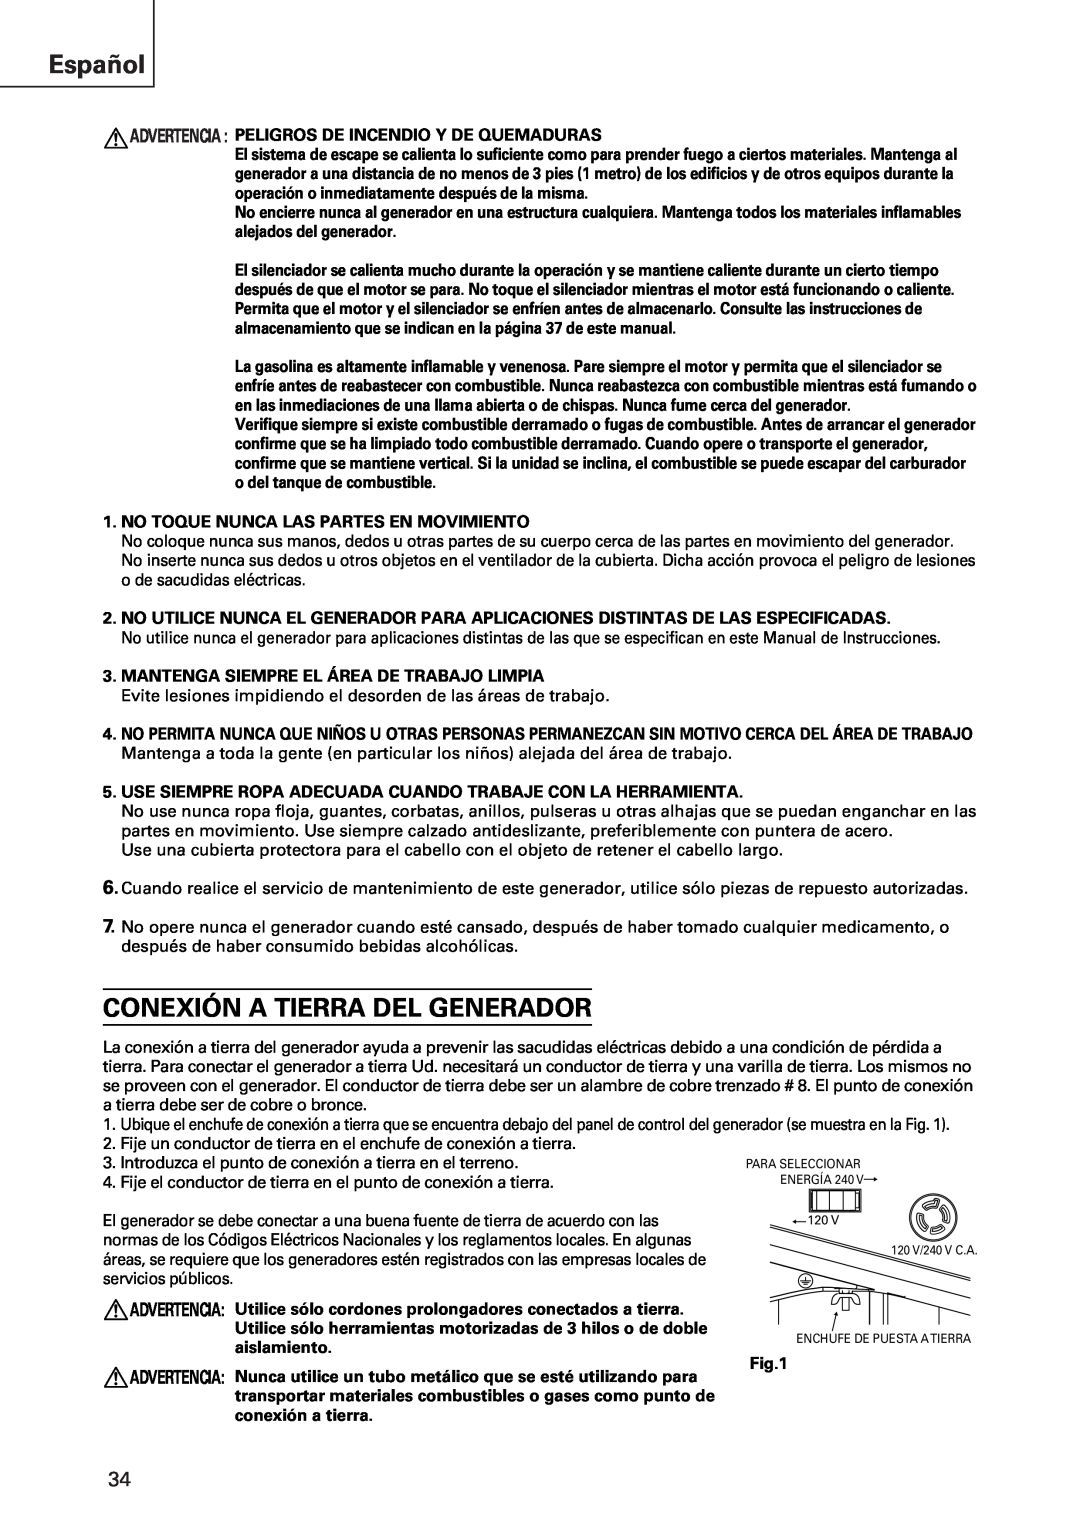 Hitachi E43 instruction manual Español, Conexión A Tierra Del Generador 